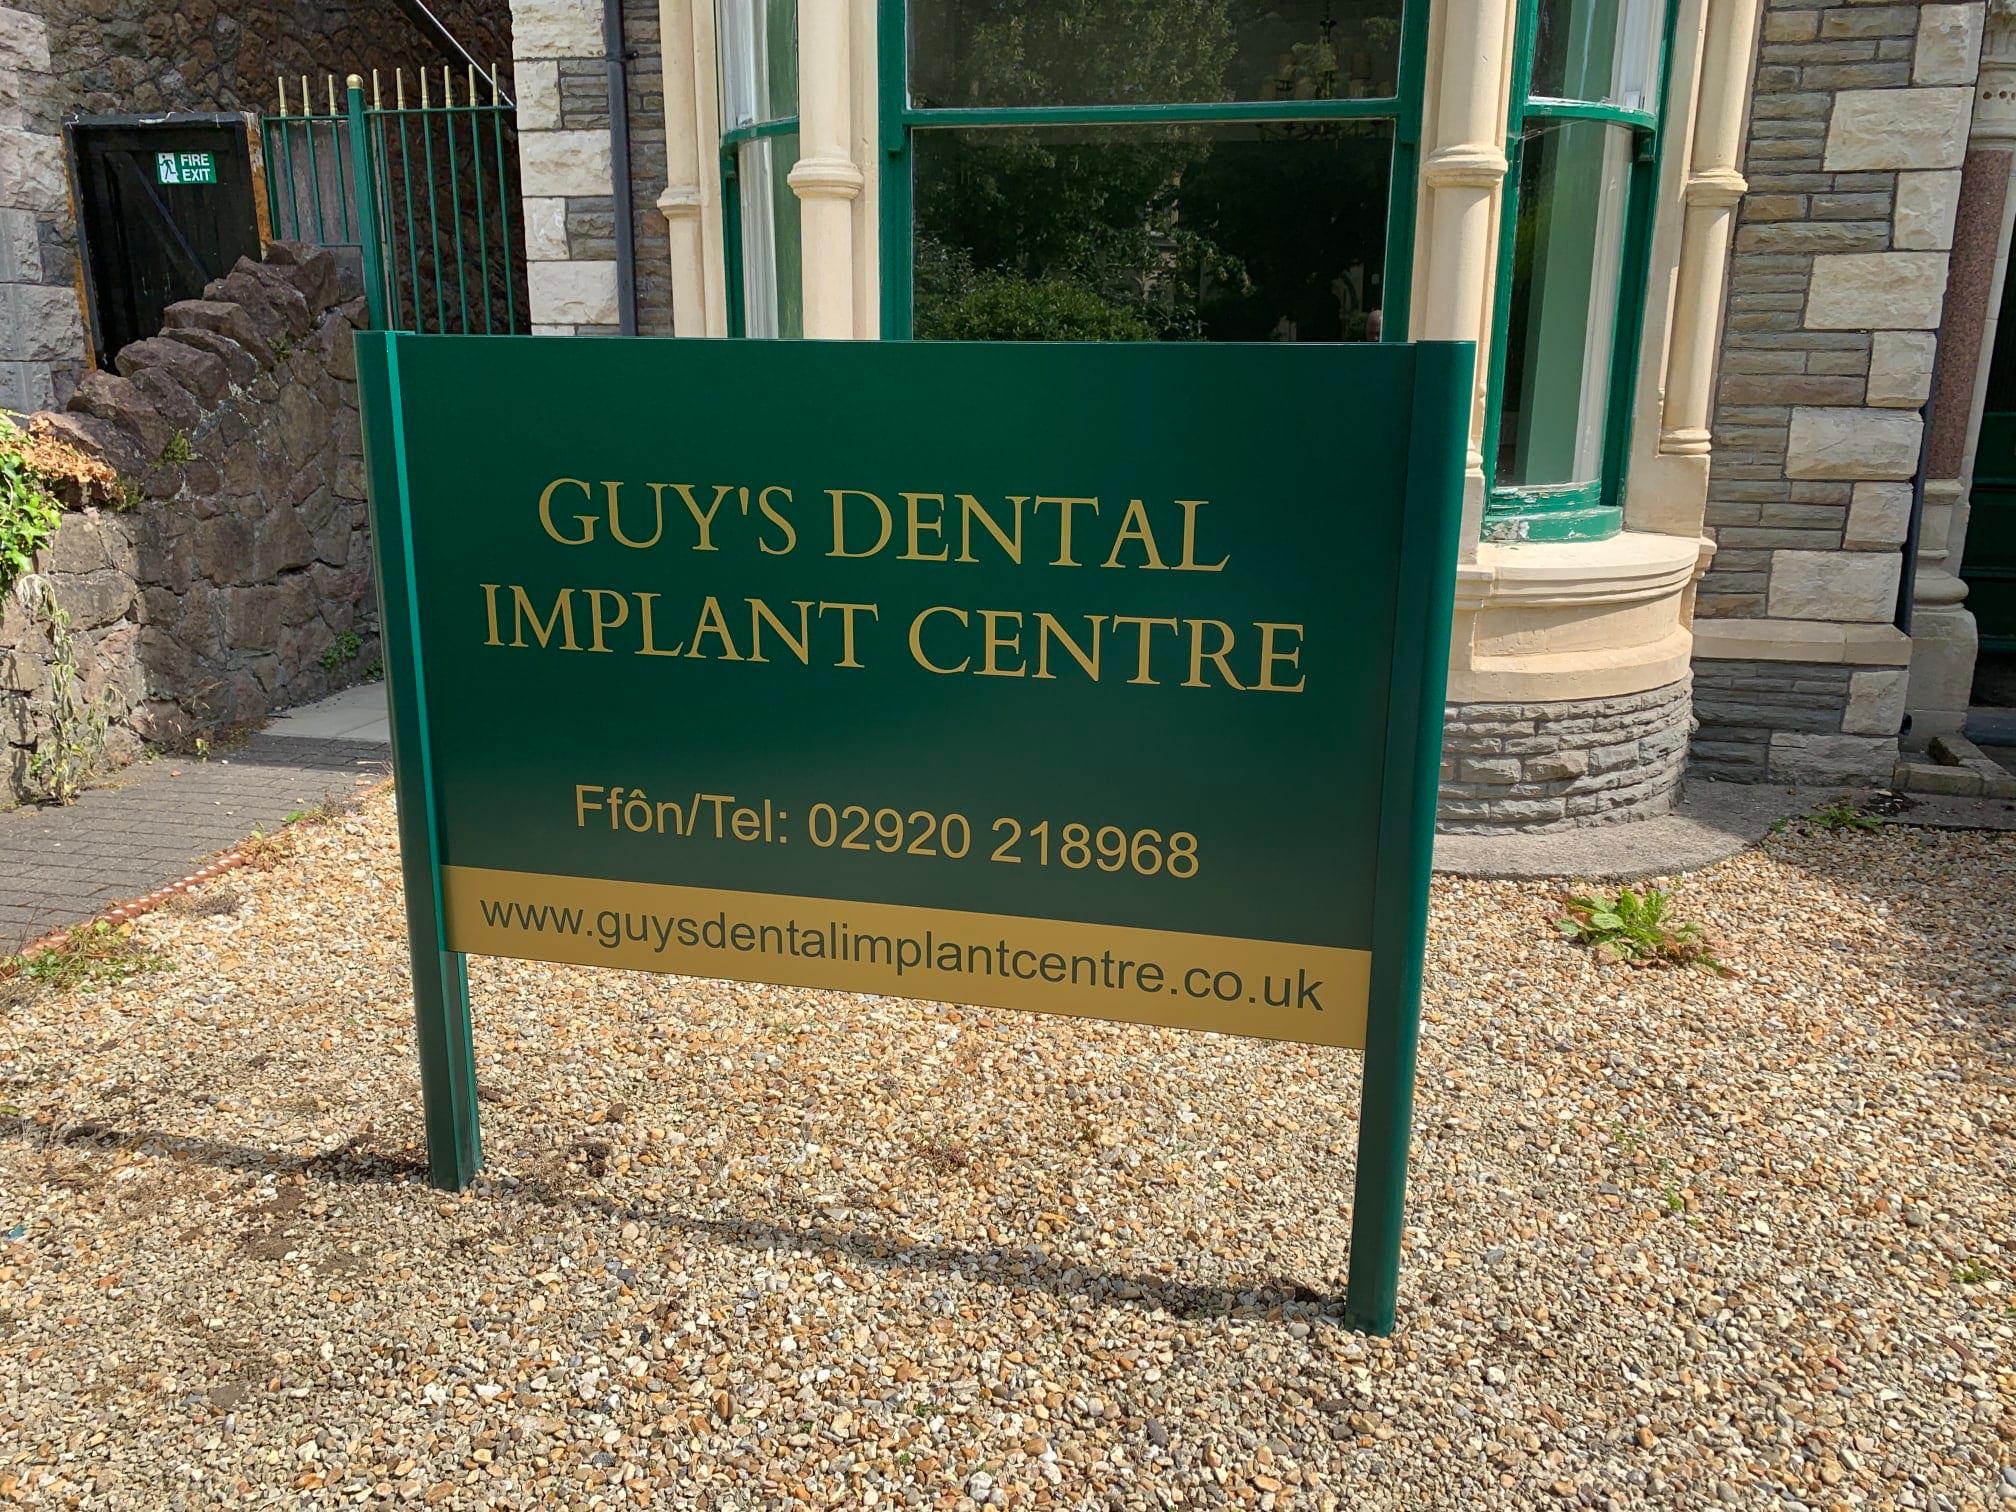 Guy's Dental Implant Centre Cardiff 02920 218968